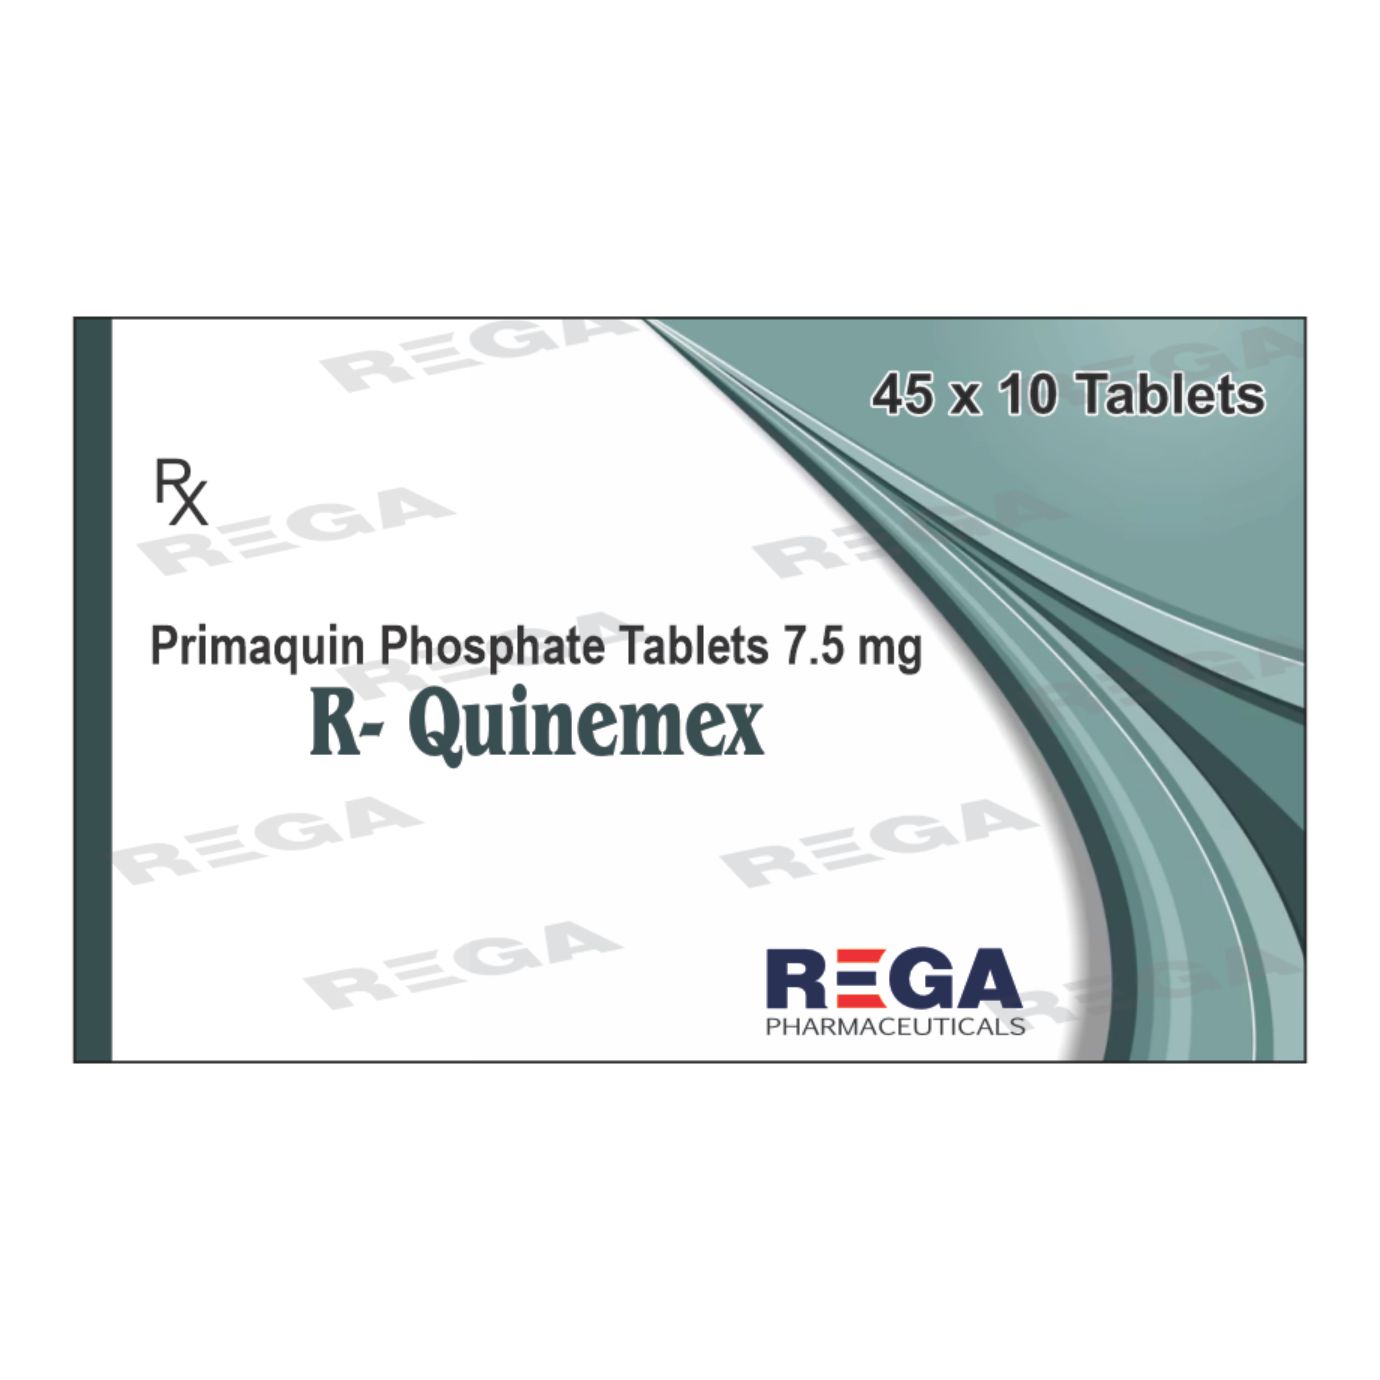 Primaquin Phosphate Tablets 7.5 mg